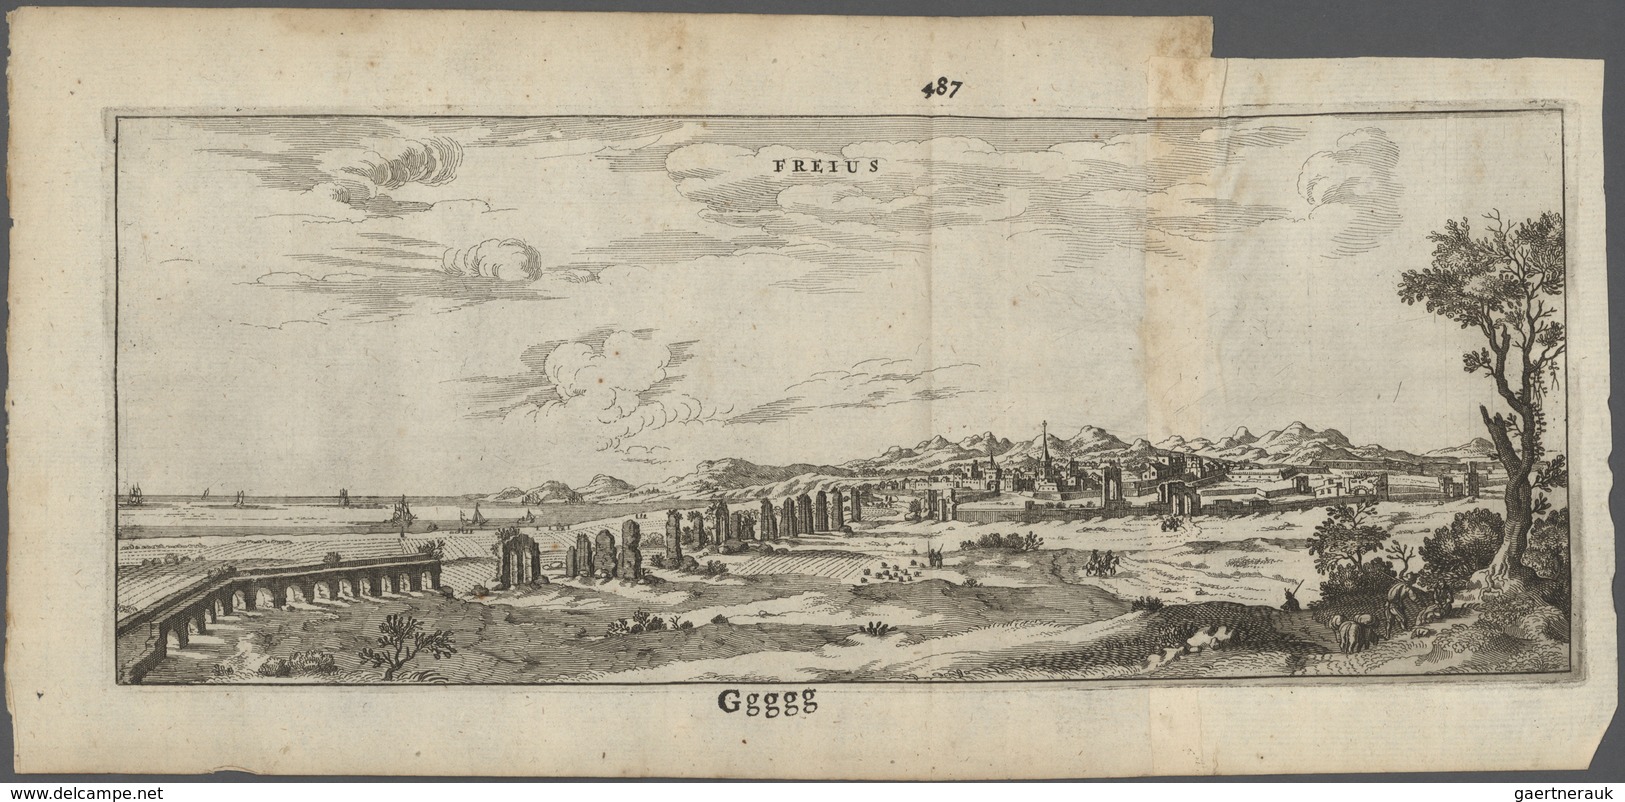 Landkarten Und Stiche: 1679 (ca). Original Frejus City Bird's-eye Map From The 1679 Dutch Produced A - Geography